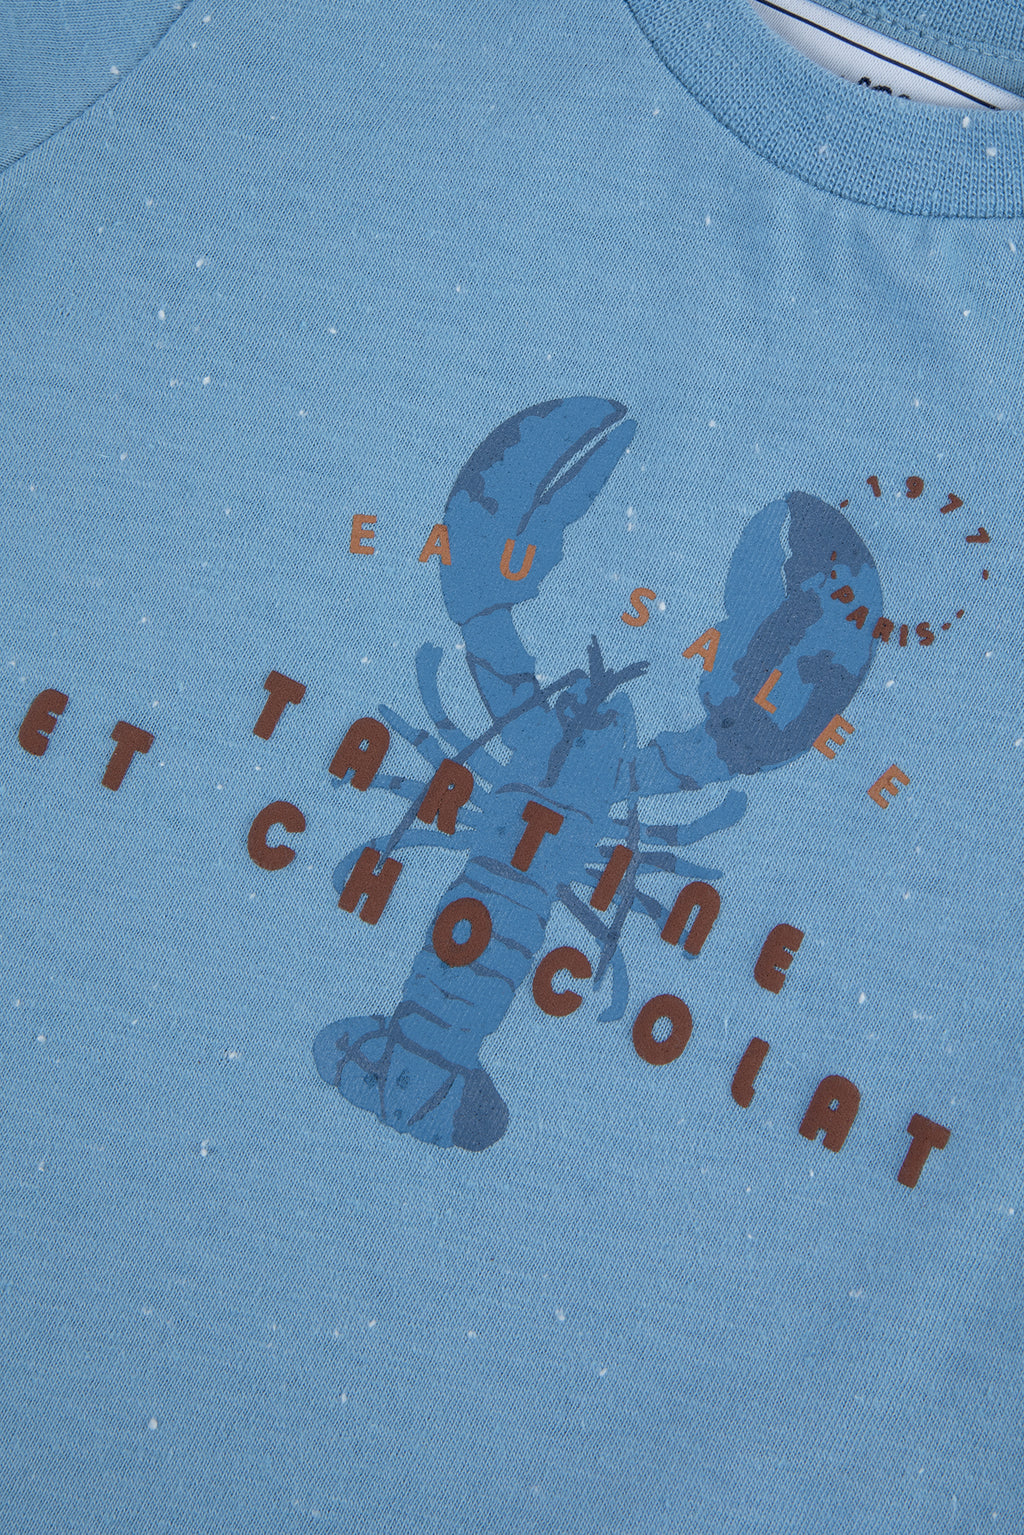 T-shirt - Azure Illustration lobster